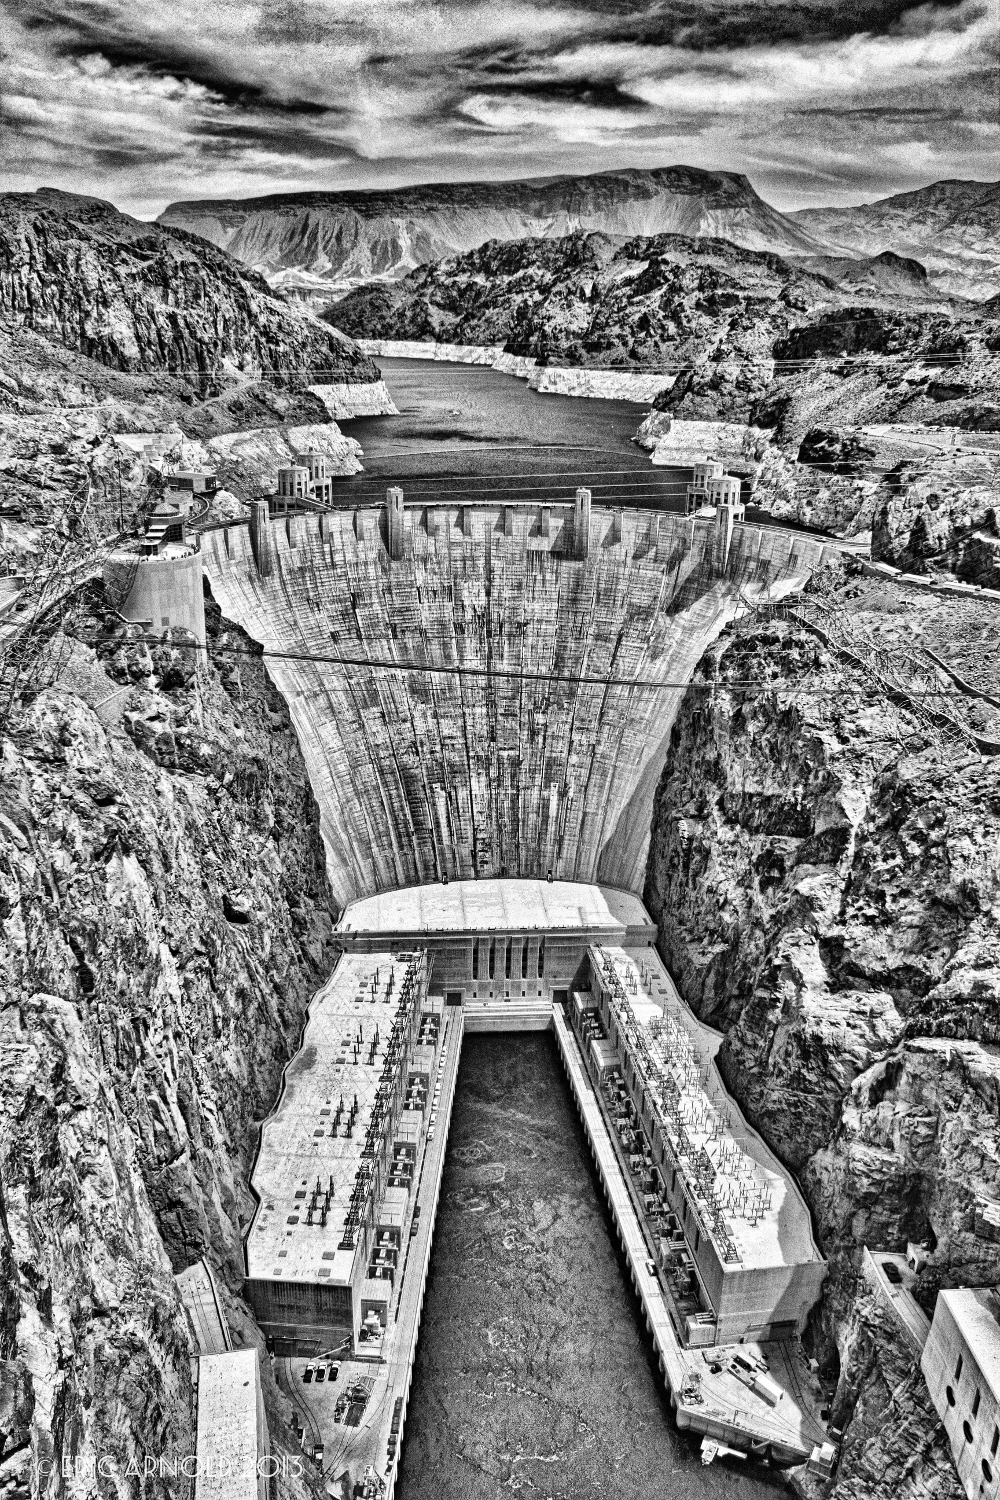 Hoover Dam 01